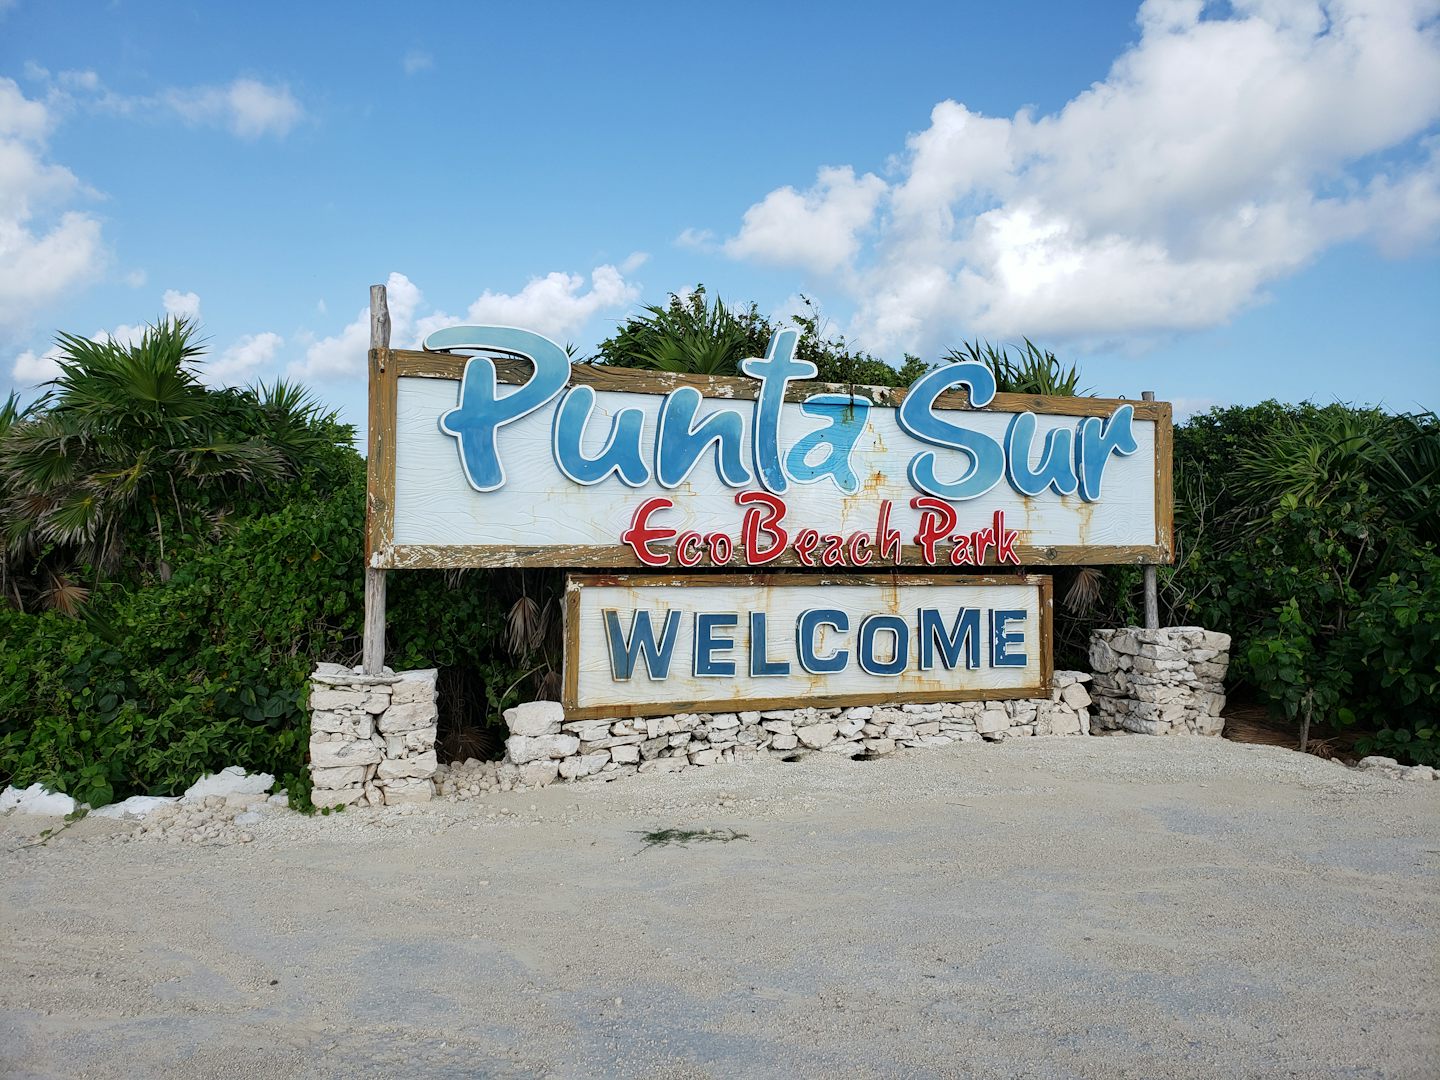 Punta Sur Ecological Park. Southeast corner of the island. Admission is $14